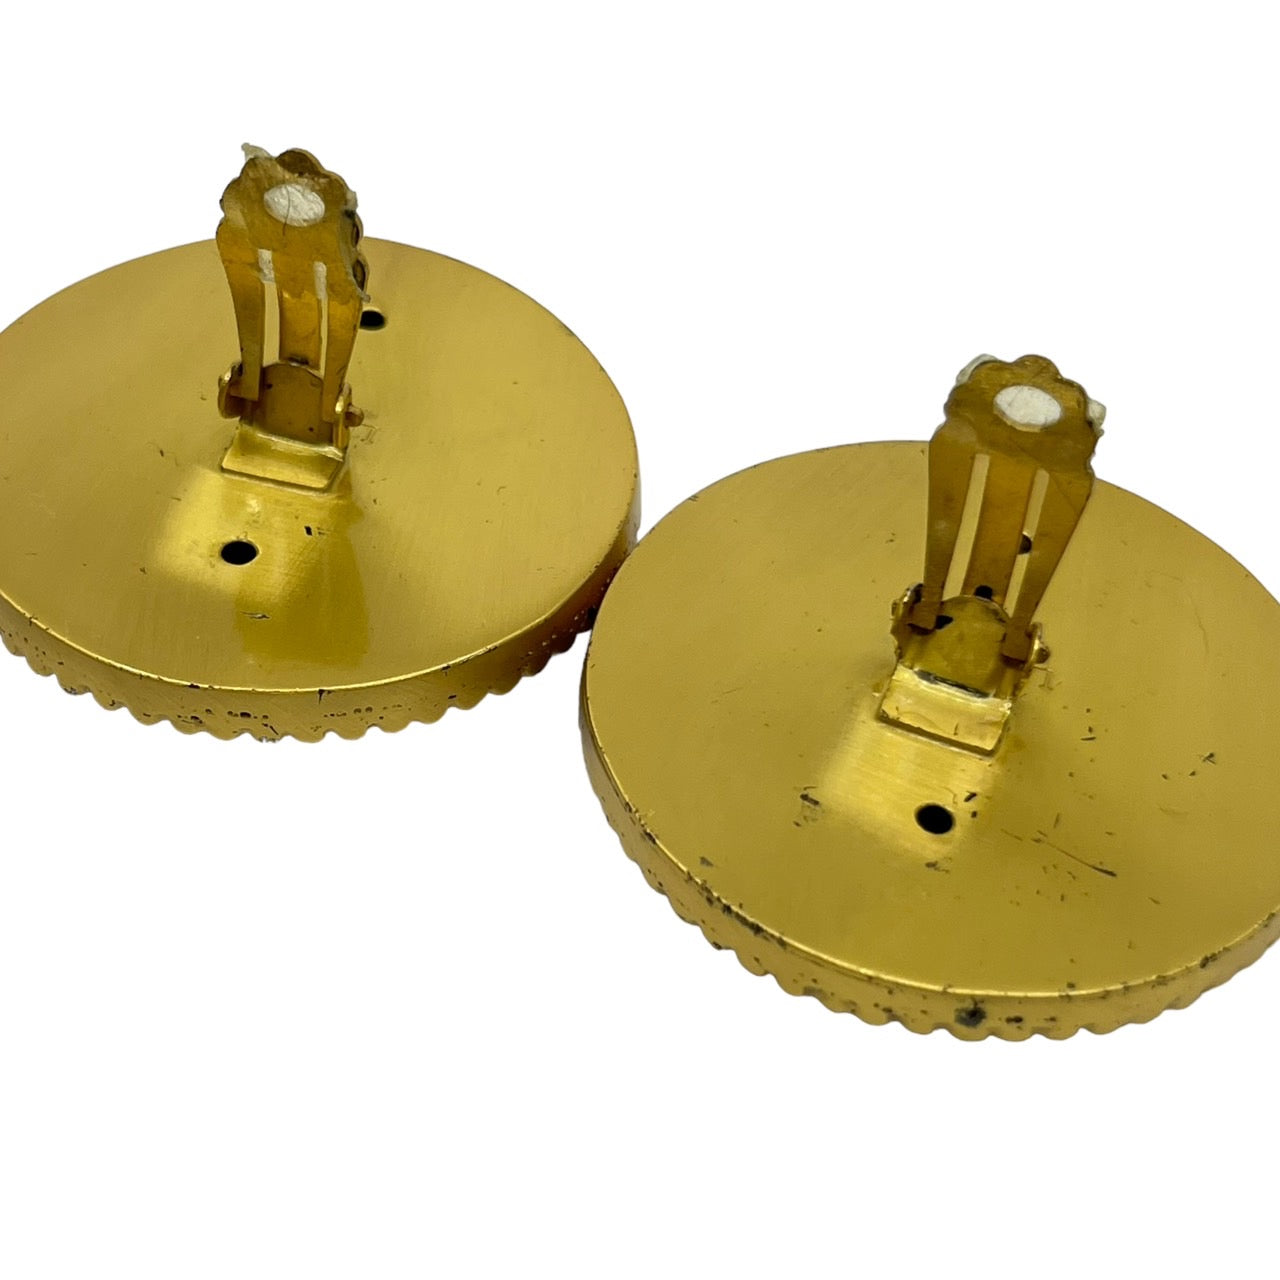 LOEWE(ロエベ) vintage circle gold earrings/ヴィンテージサークルゴールドイヤリング/丸/大ぶり ゴールド 刻印925